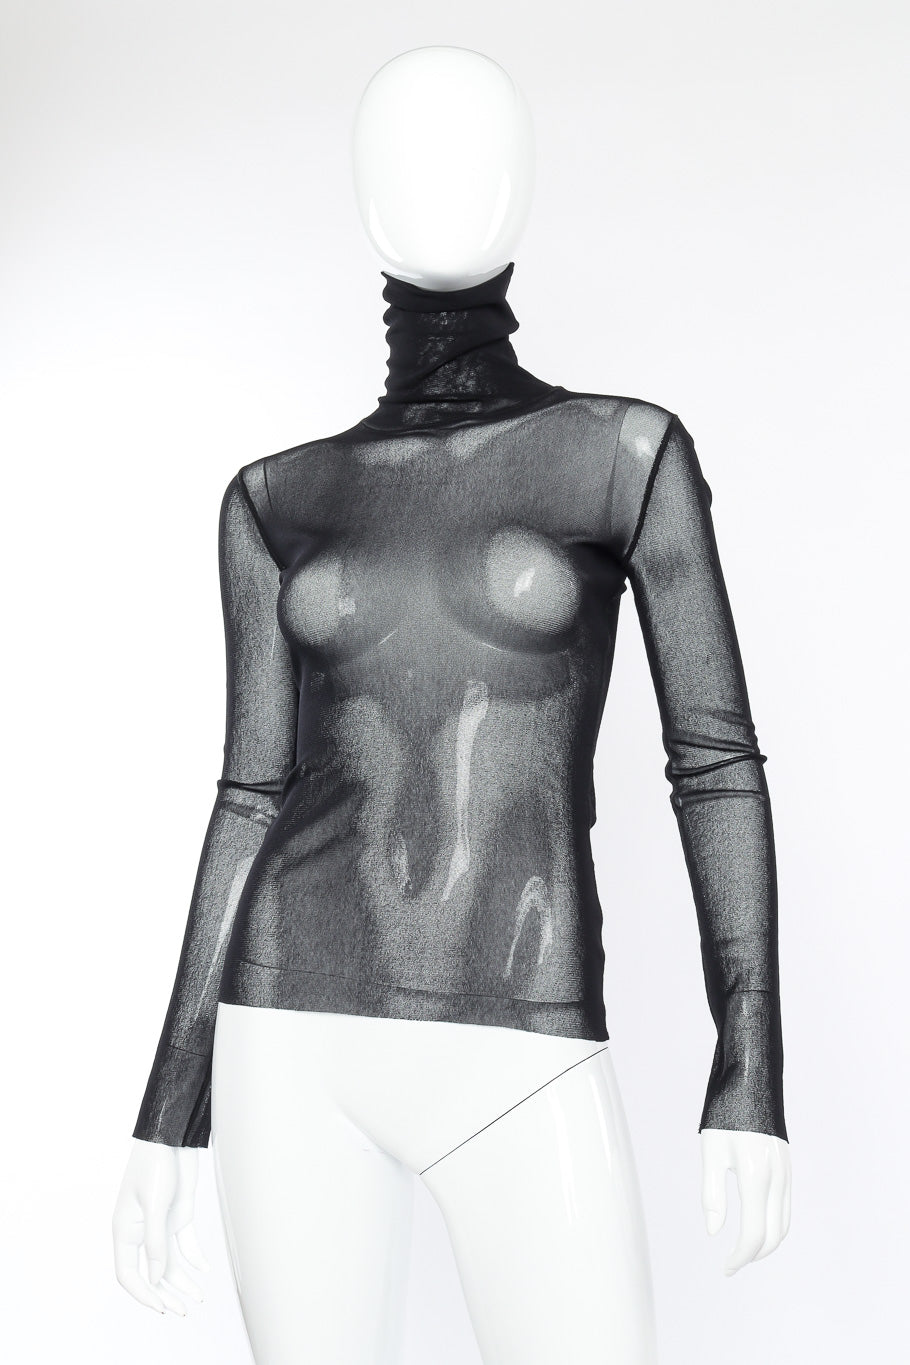 Vintage Jean Paul Gaultier Soleil Mesh Turtleneck front view on mannequin @Recessla